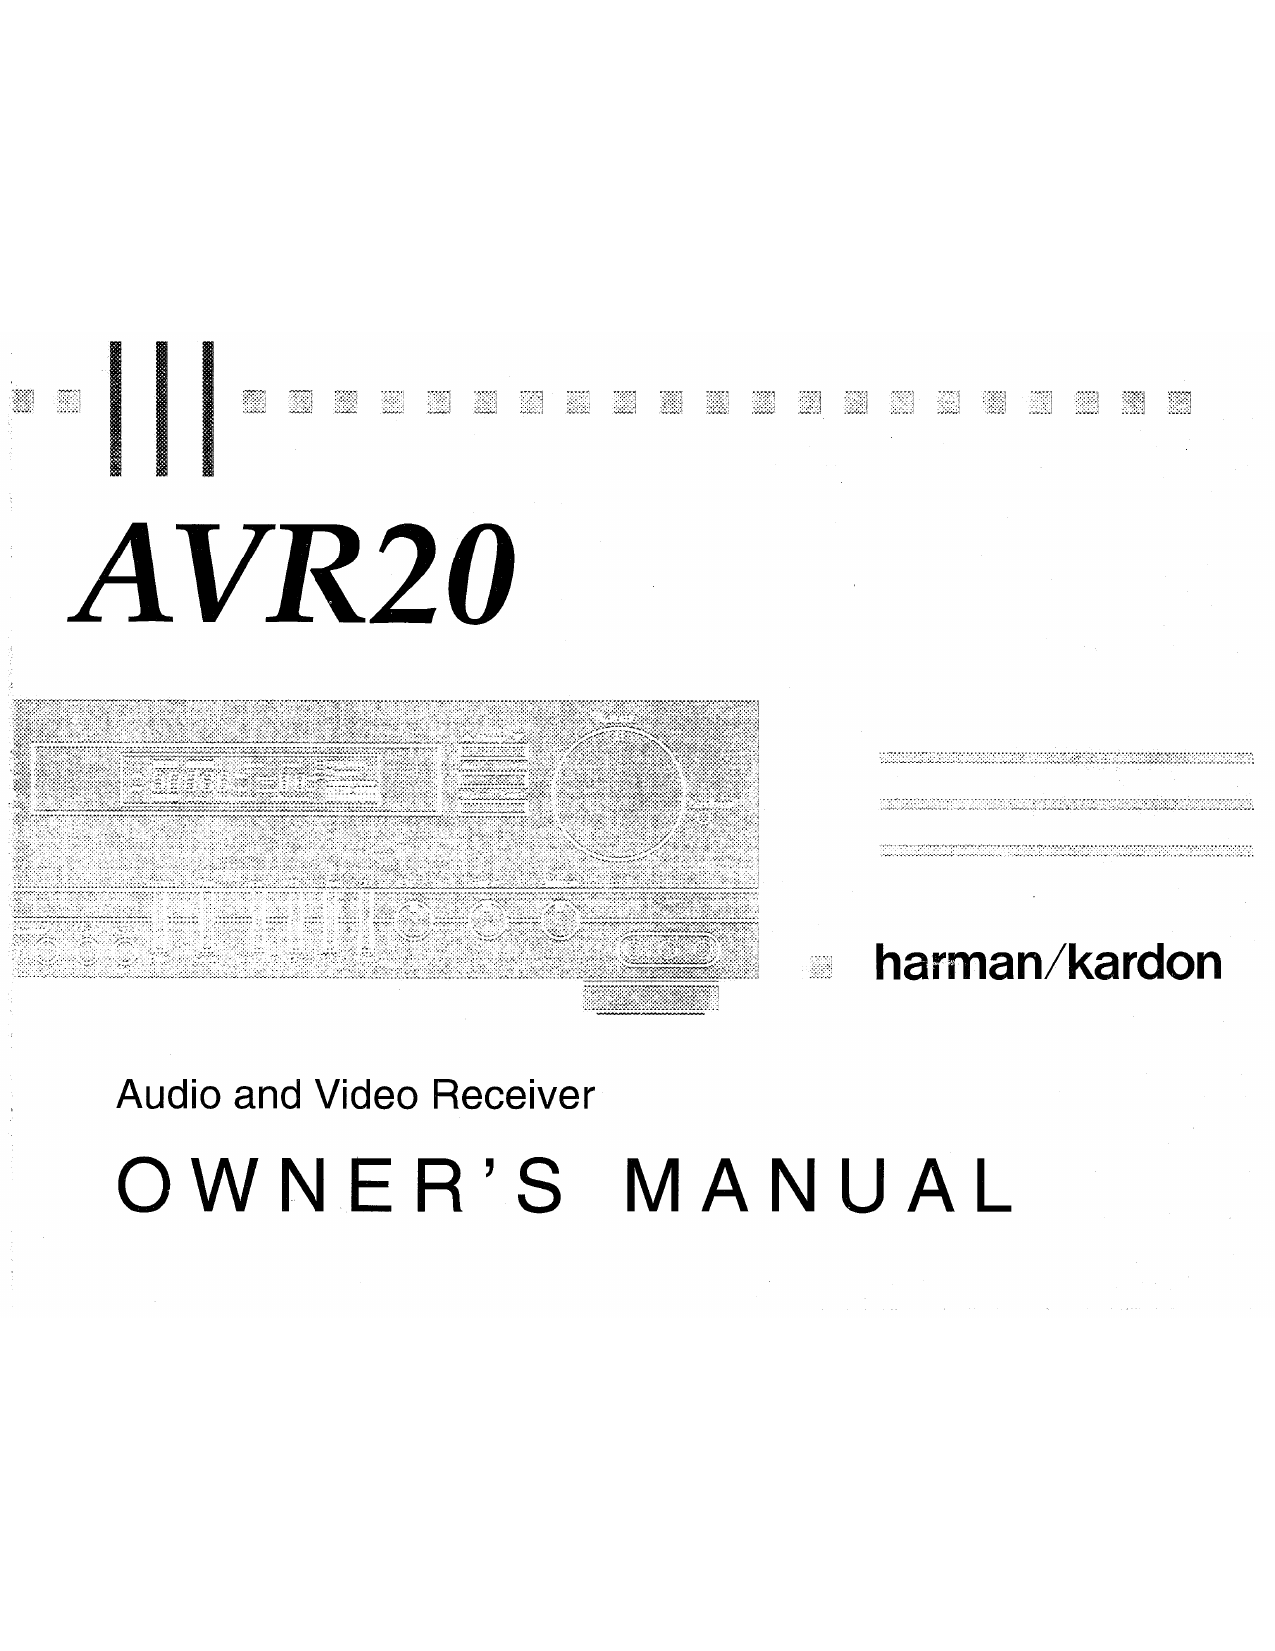 Harman Kardon AVR 20 Owner's manual - Manualzz